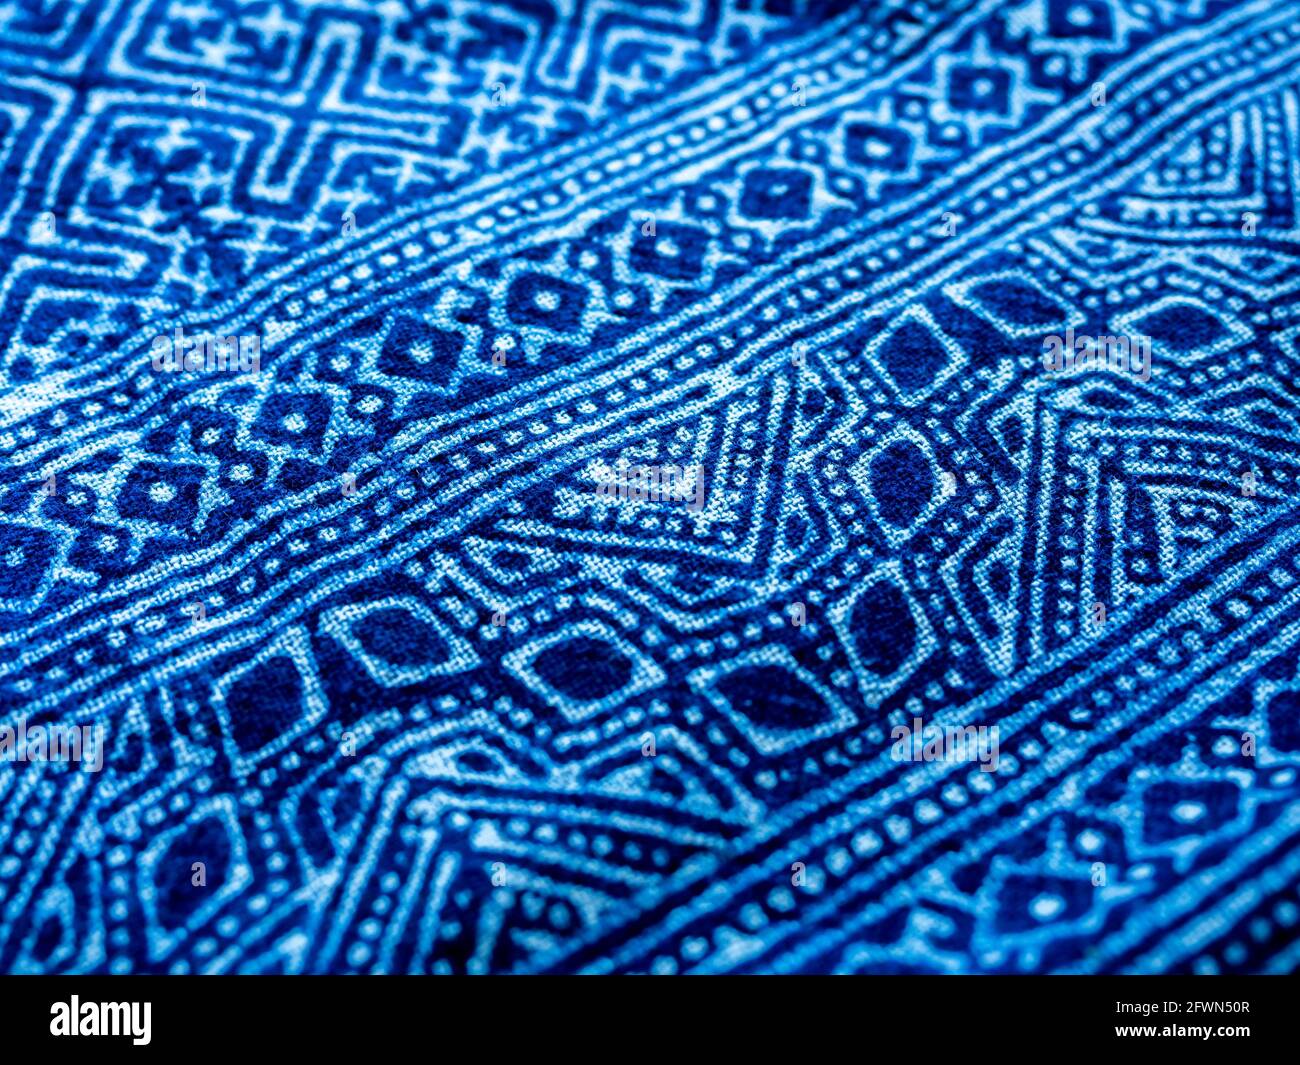 Indaco blu tessuto cravatta colore motivo sfondo. Tessuto tinto indaco con  motivo grafico etnico astratto Foto stock - Alamy